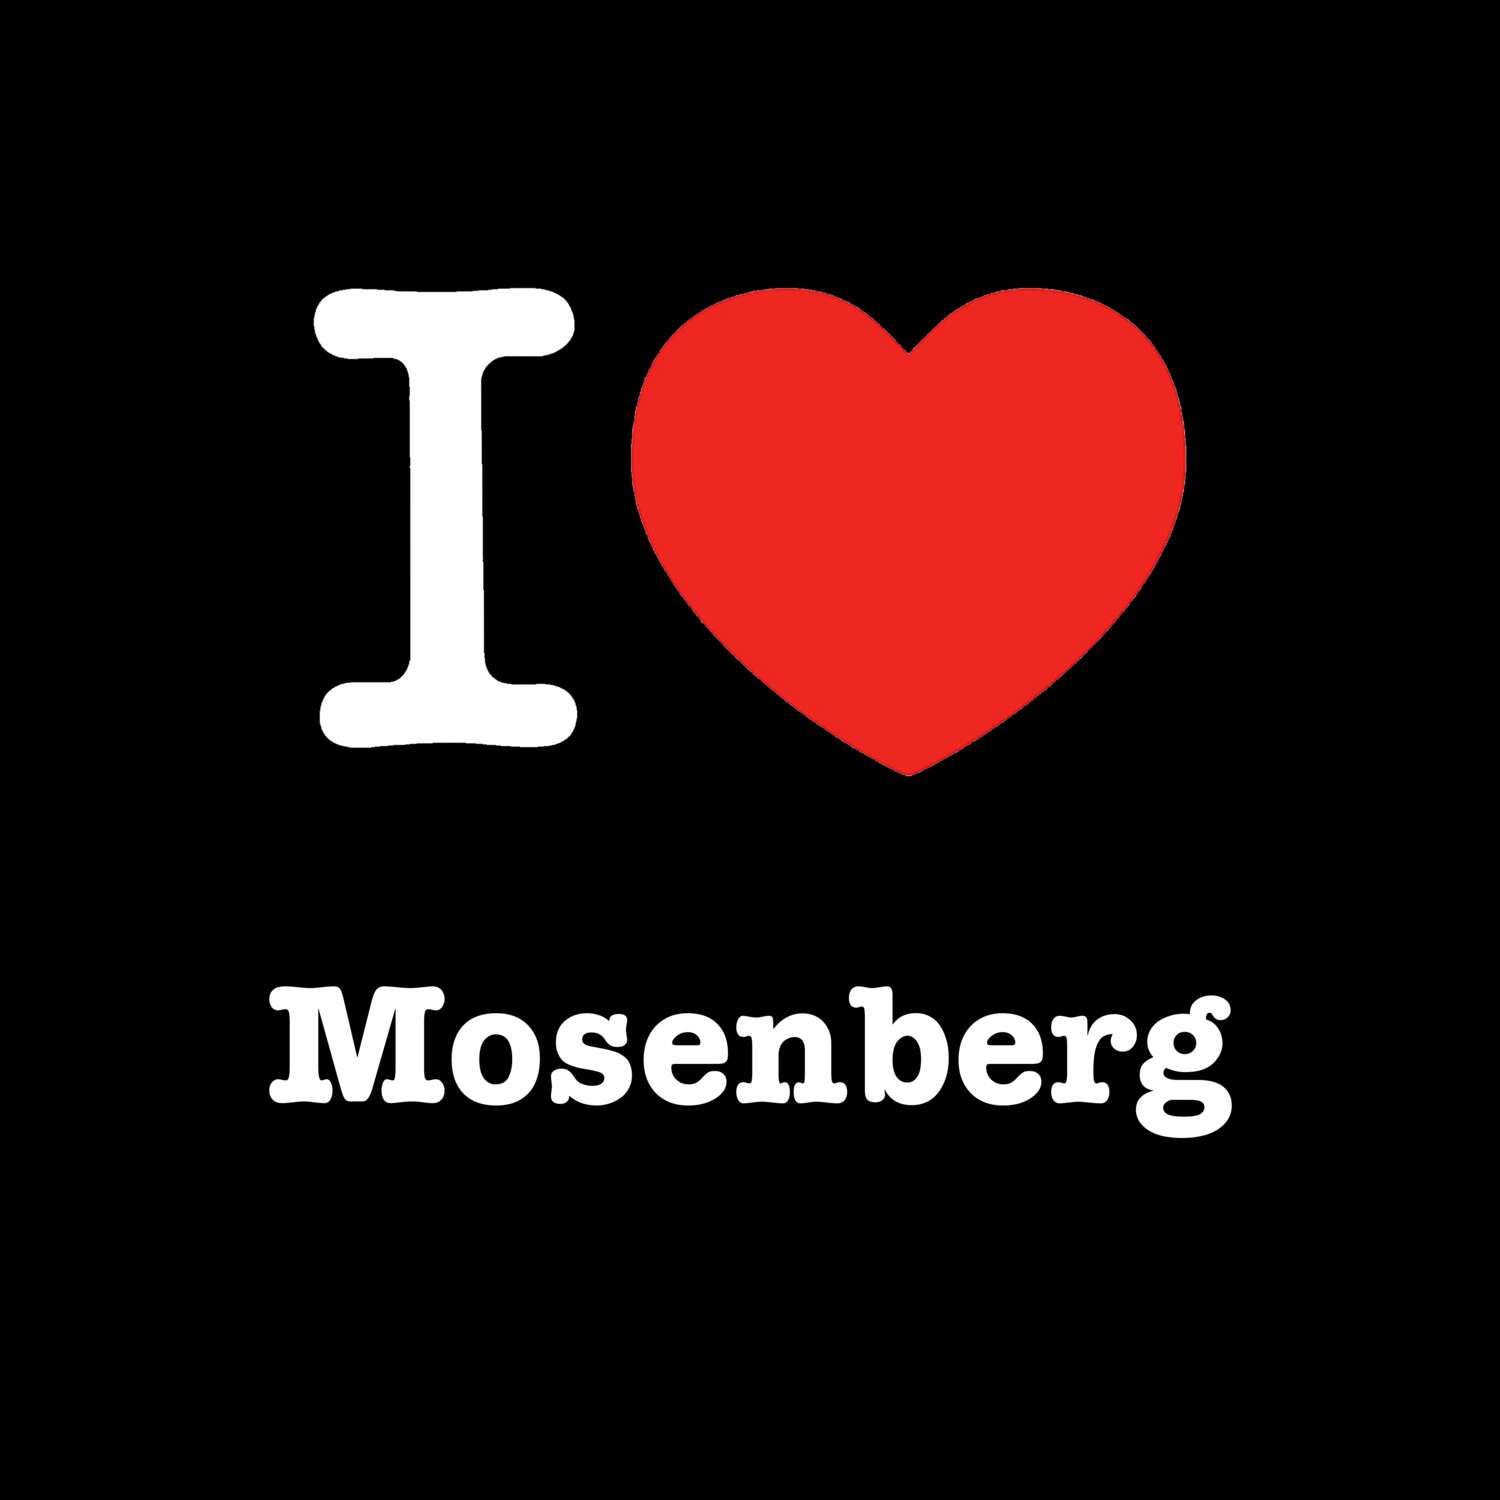 Mosenberg T-Shirt »I love«